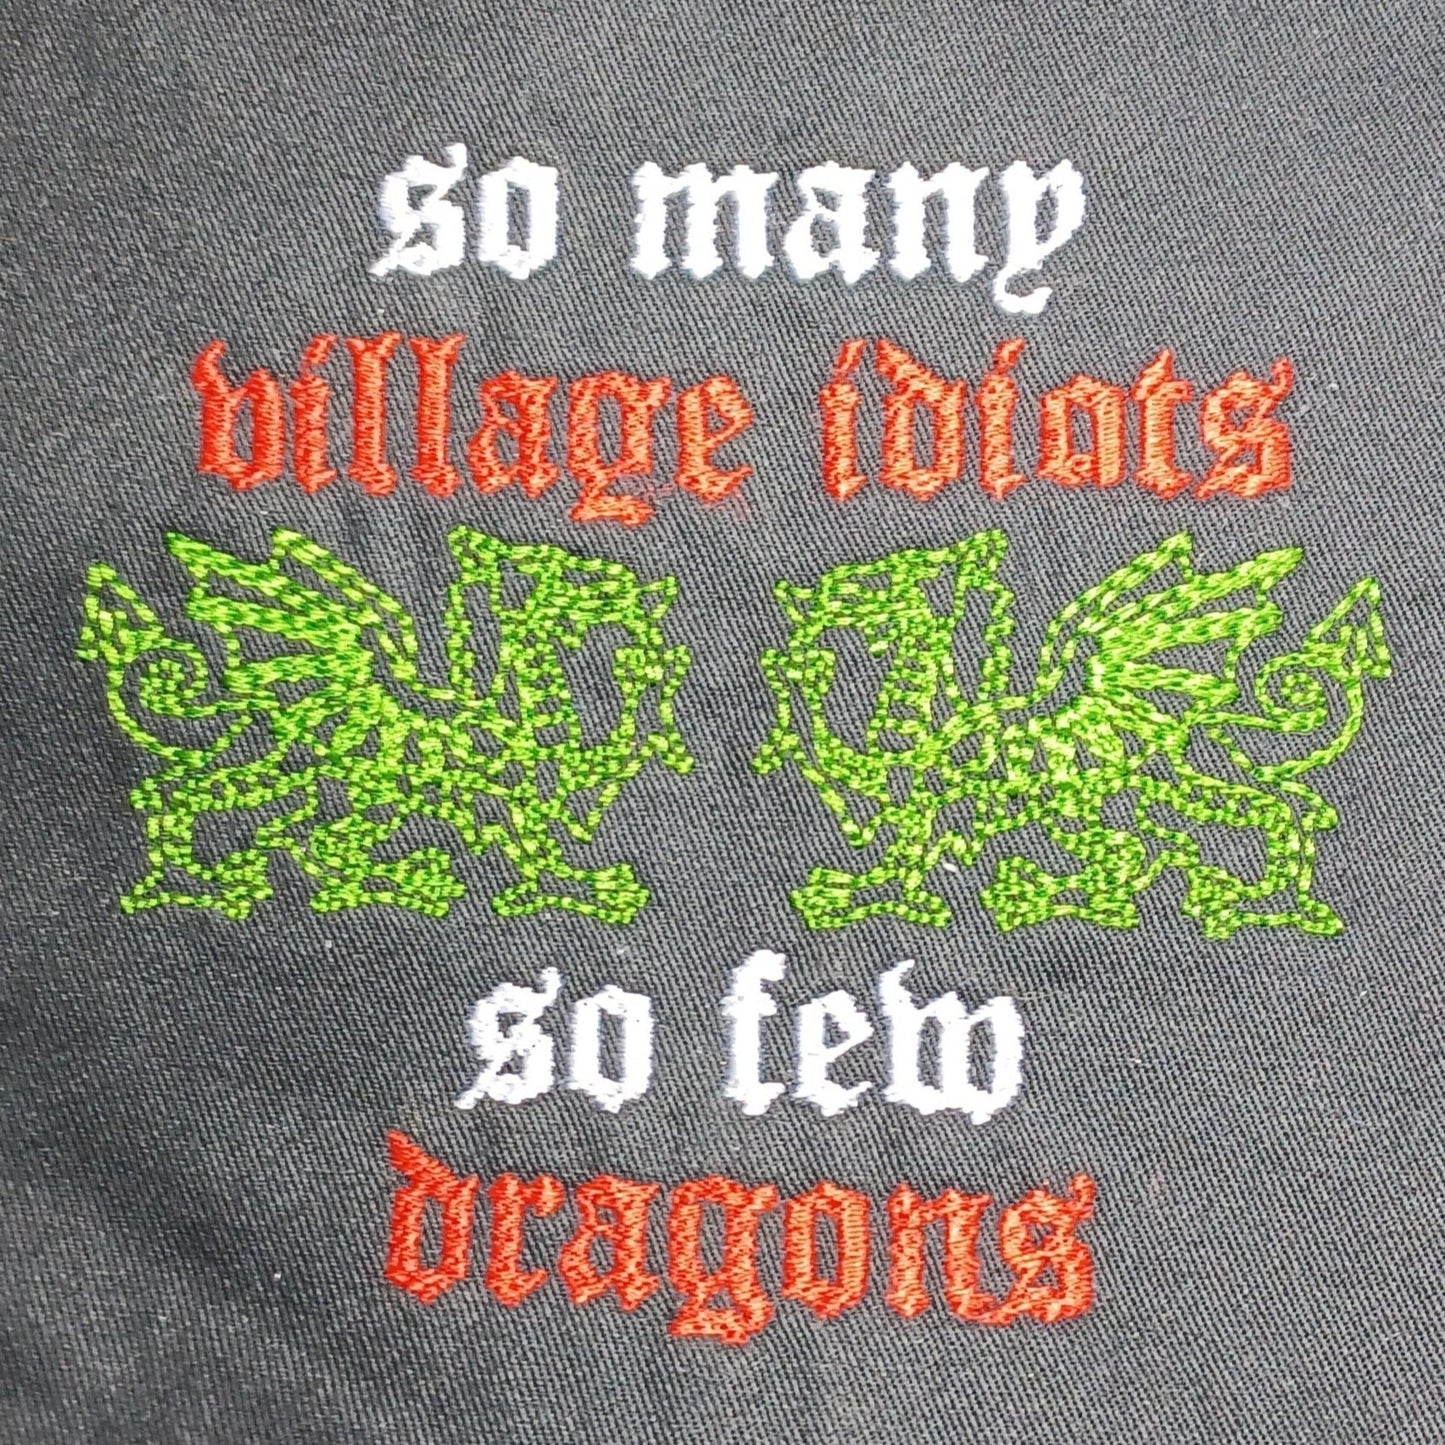 So Many Village Idiots, So Few Dragons (Embroidered CYO)